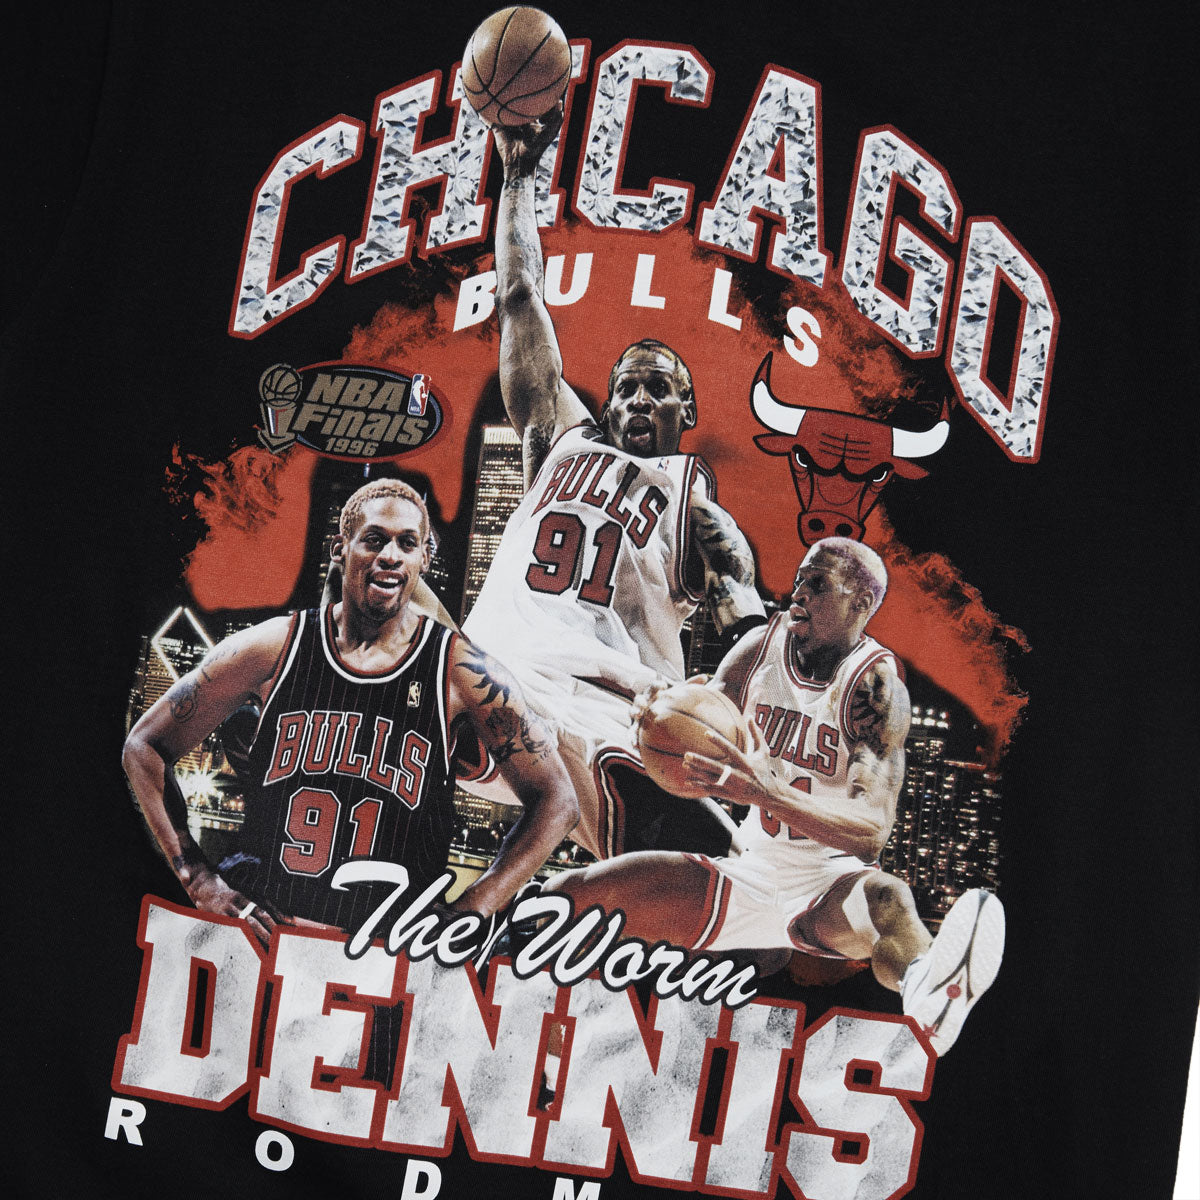 Dennis Rodman Chicago Bulls Mitchell & Ness Player Graphic T-Shirt - Black